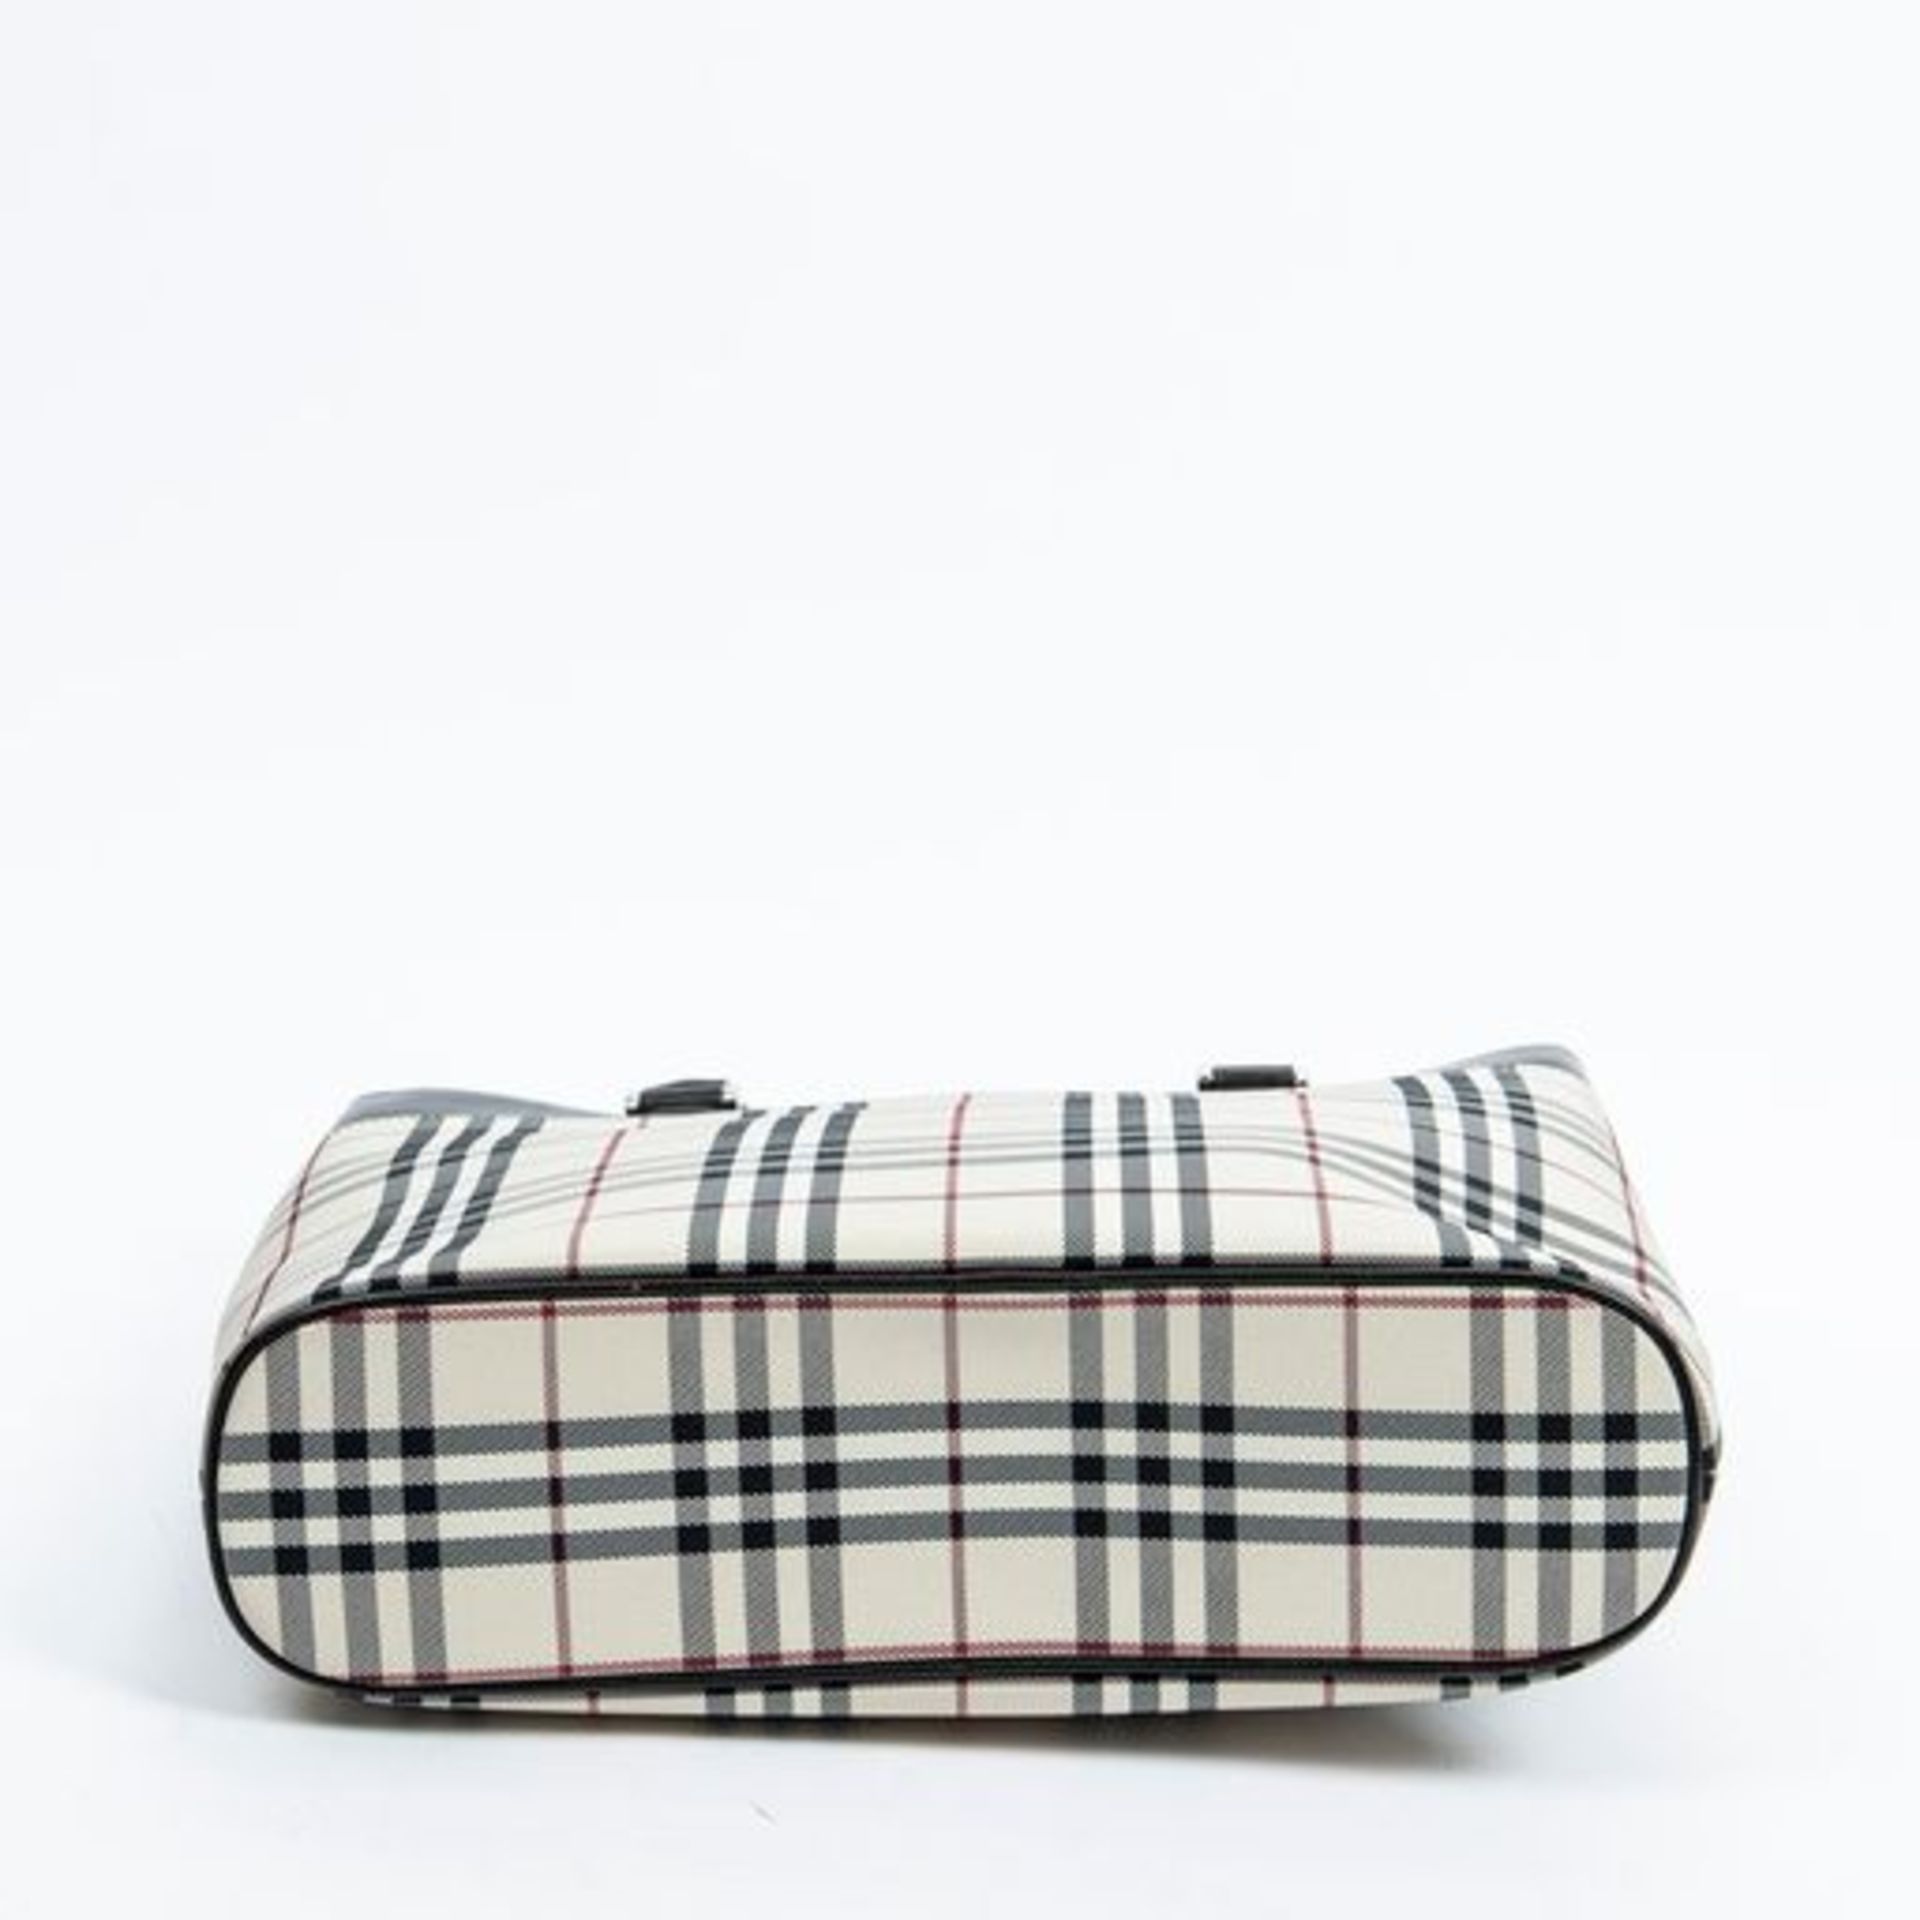 RRP £975.00 Lot To Contain 1 Burberry Canvas Medium Slip Pocket Tote Handbag In Beige/Dark Brown - - Image 3 of 3